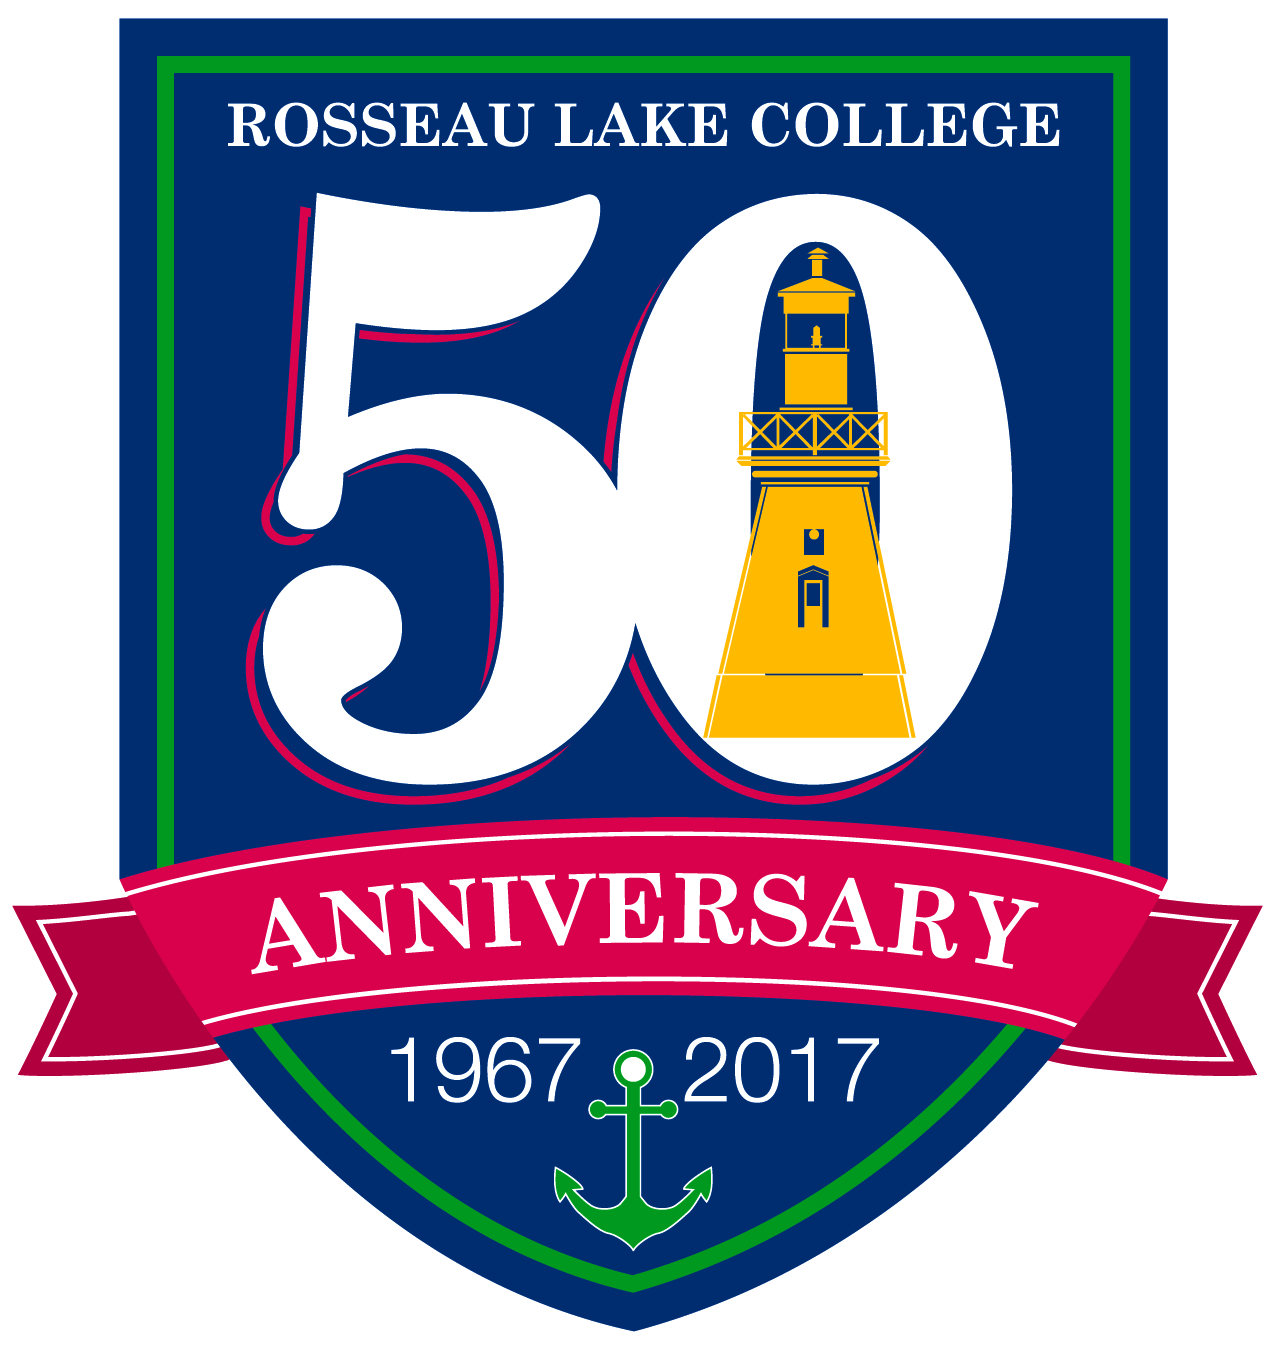 RLC 50th Anniversary Celebration Invitation